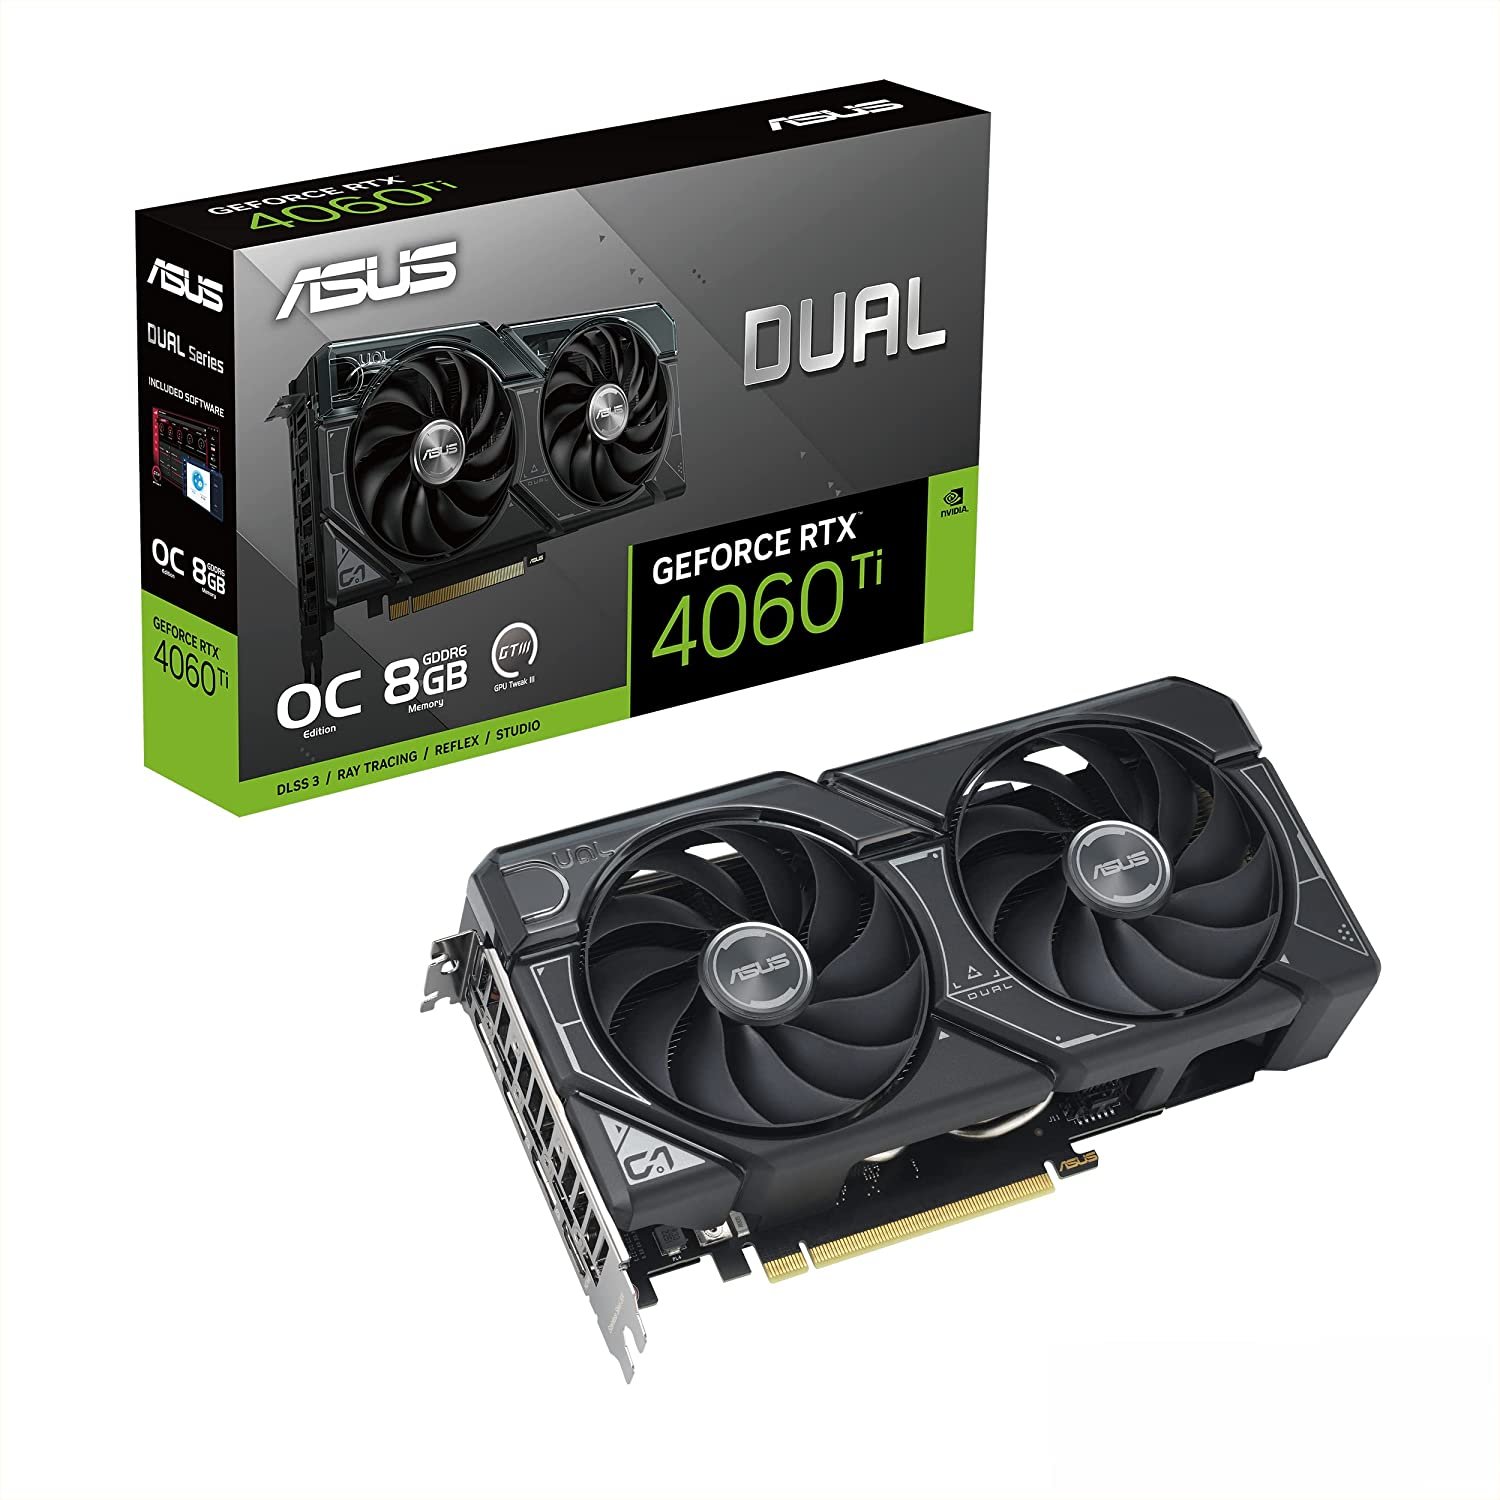 GPU Upgrade - Best $800 Gaming PC Build 2023